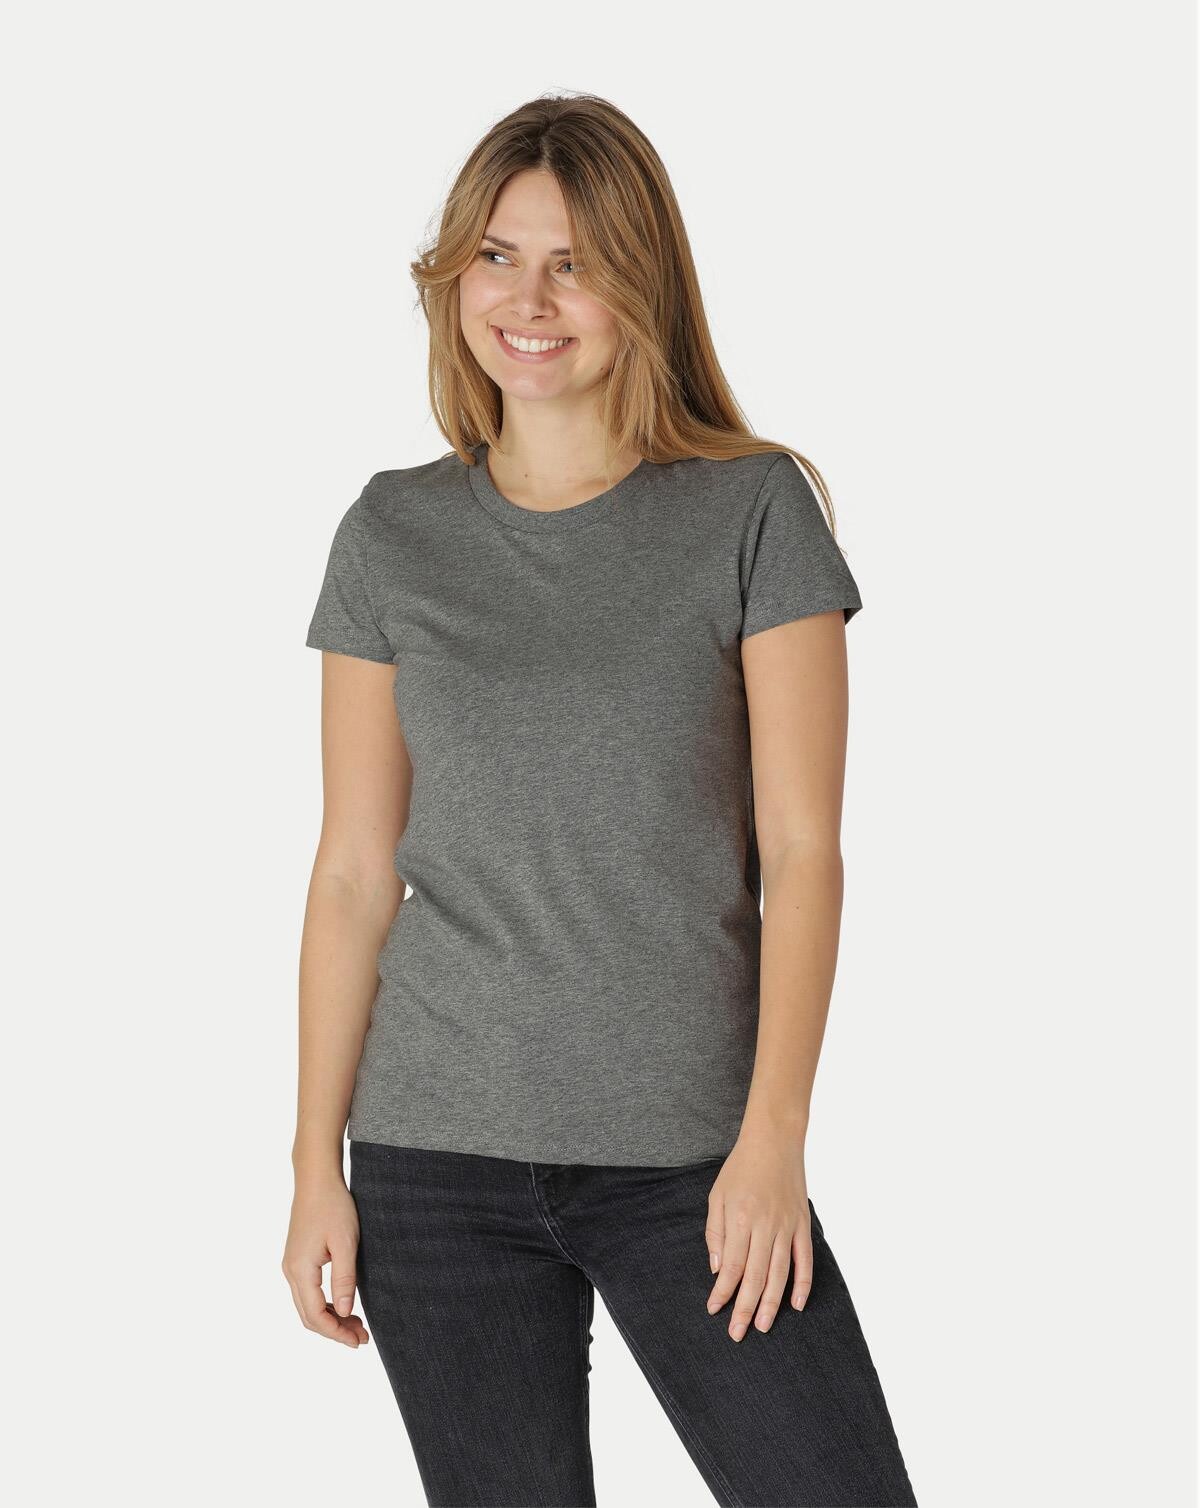 Neutral Økologisk Dame Tætsiddende T-Shirt (Mørkegrå, XL)